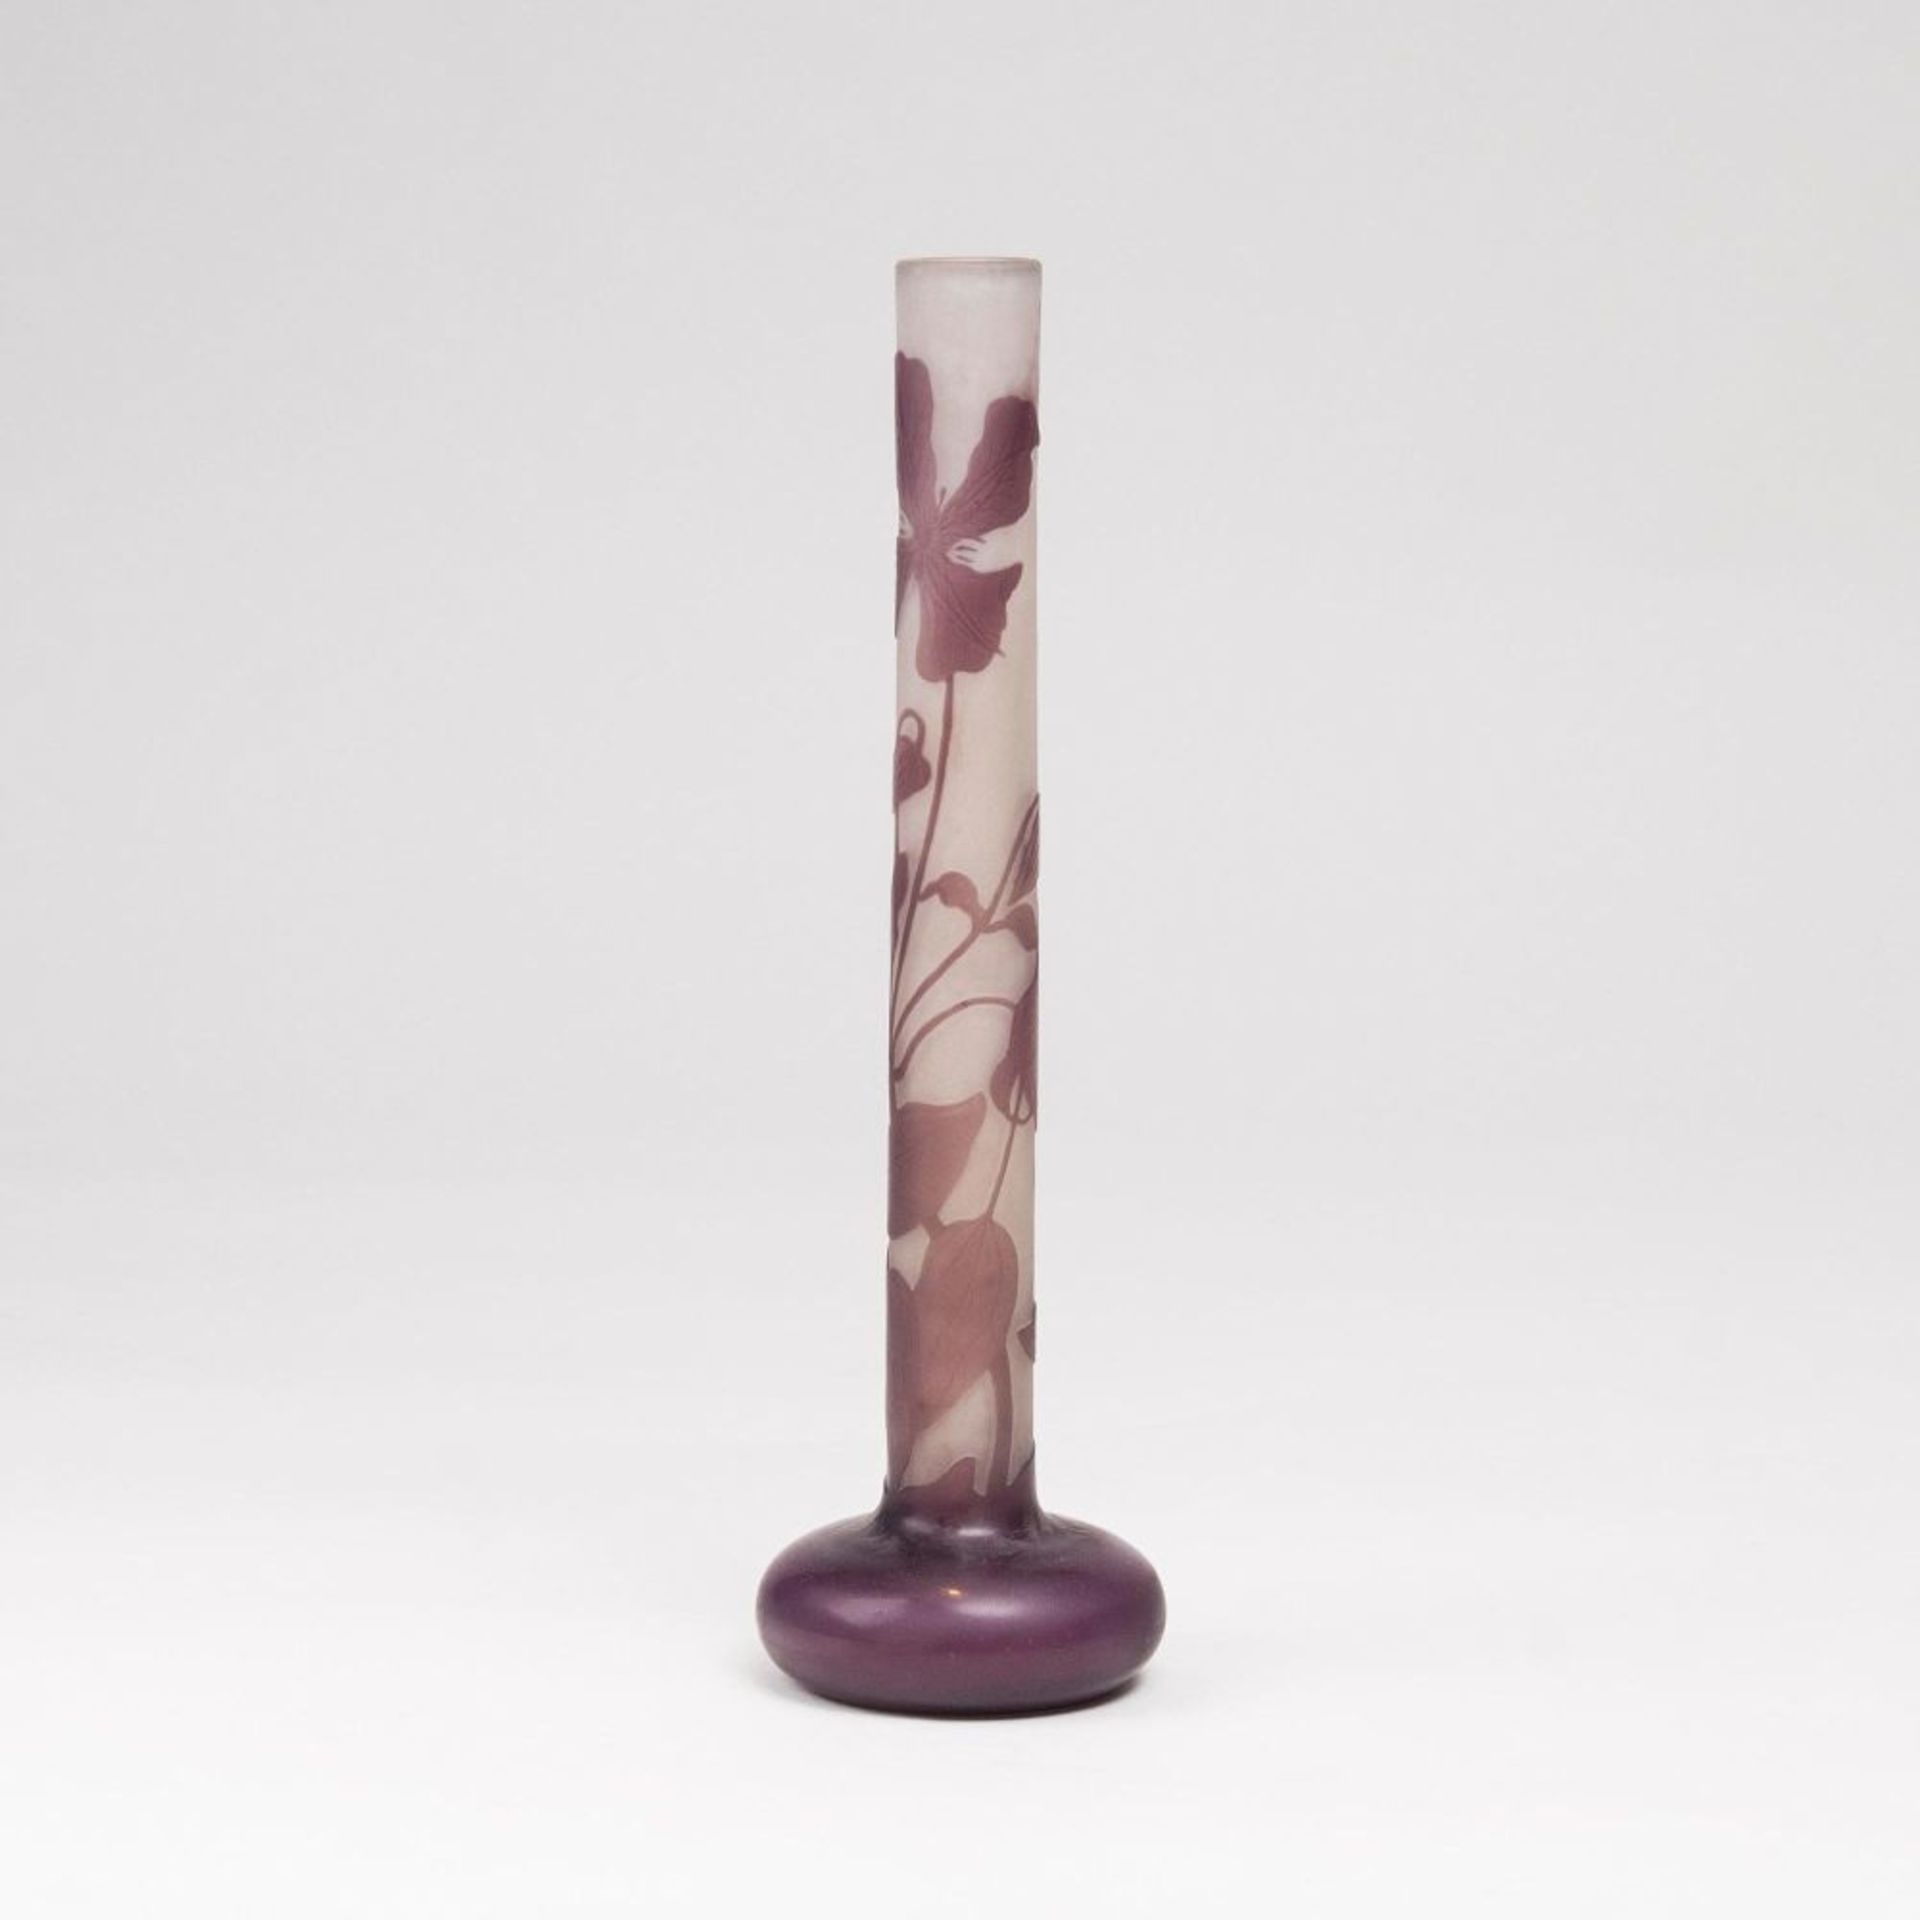 Gallé Solifleur-Vase mit ClematisNancy, Cristallerie de Gallé, um 1905-1910. Milchig-opakes Glas mit